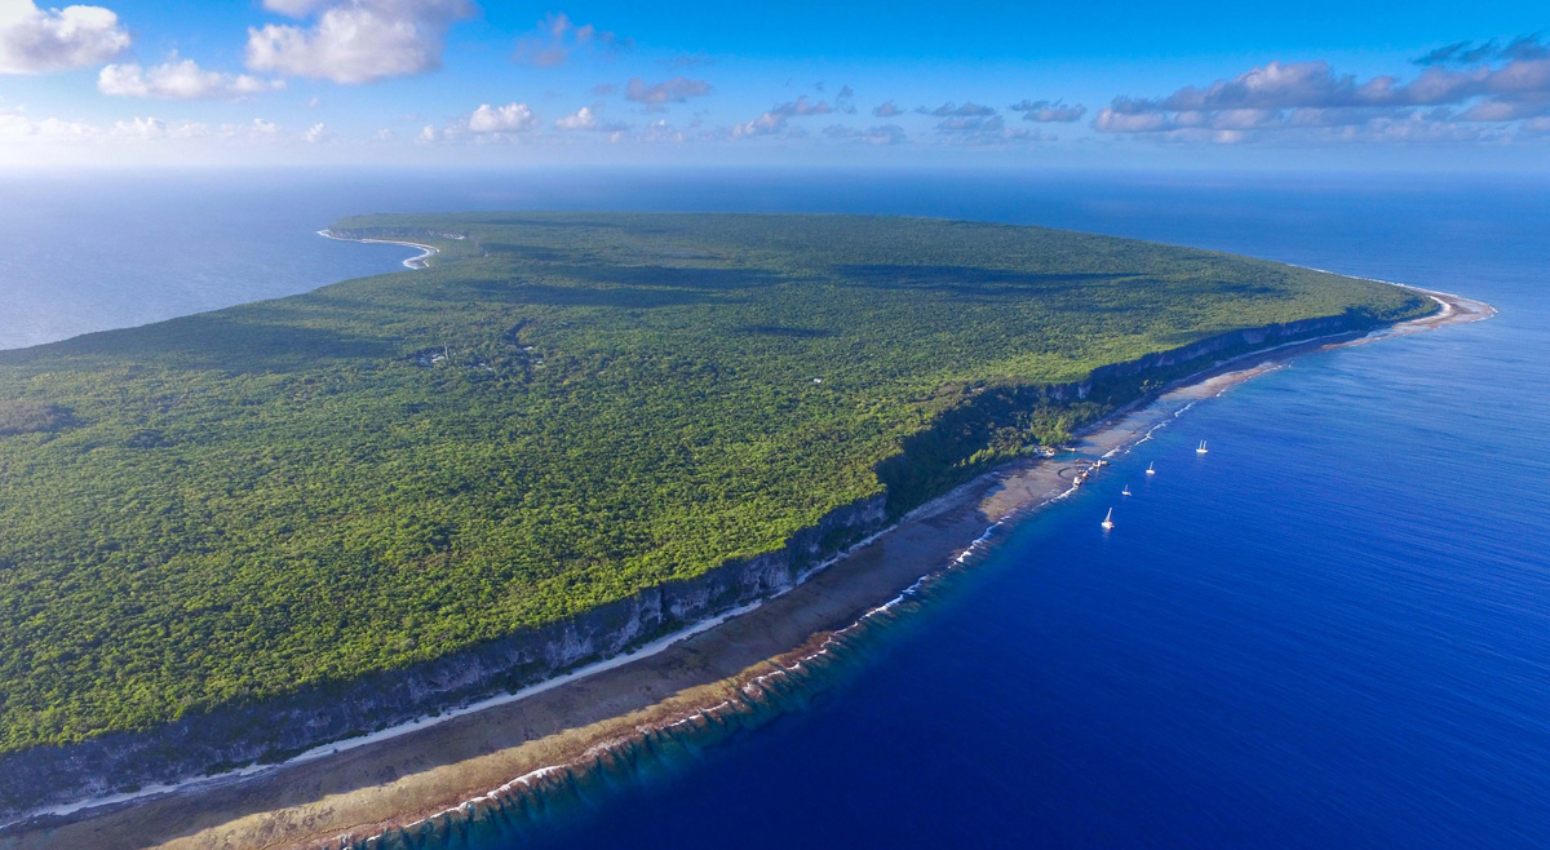 Aerial view of the island of Makatea's coastline